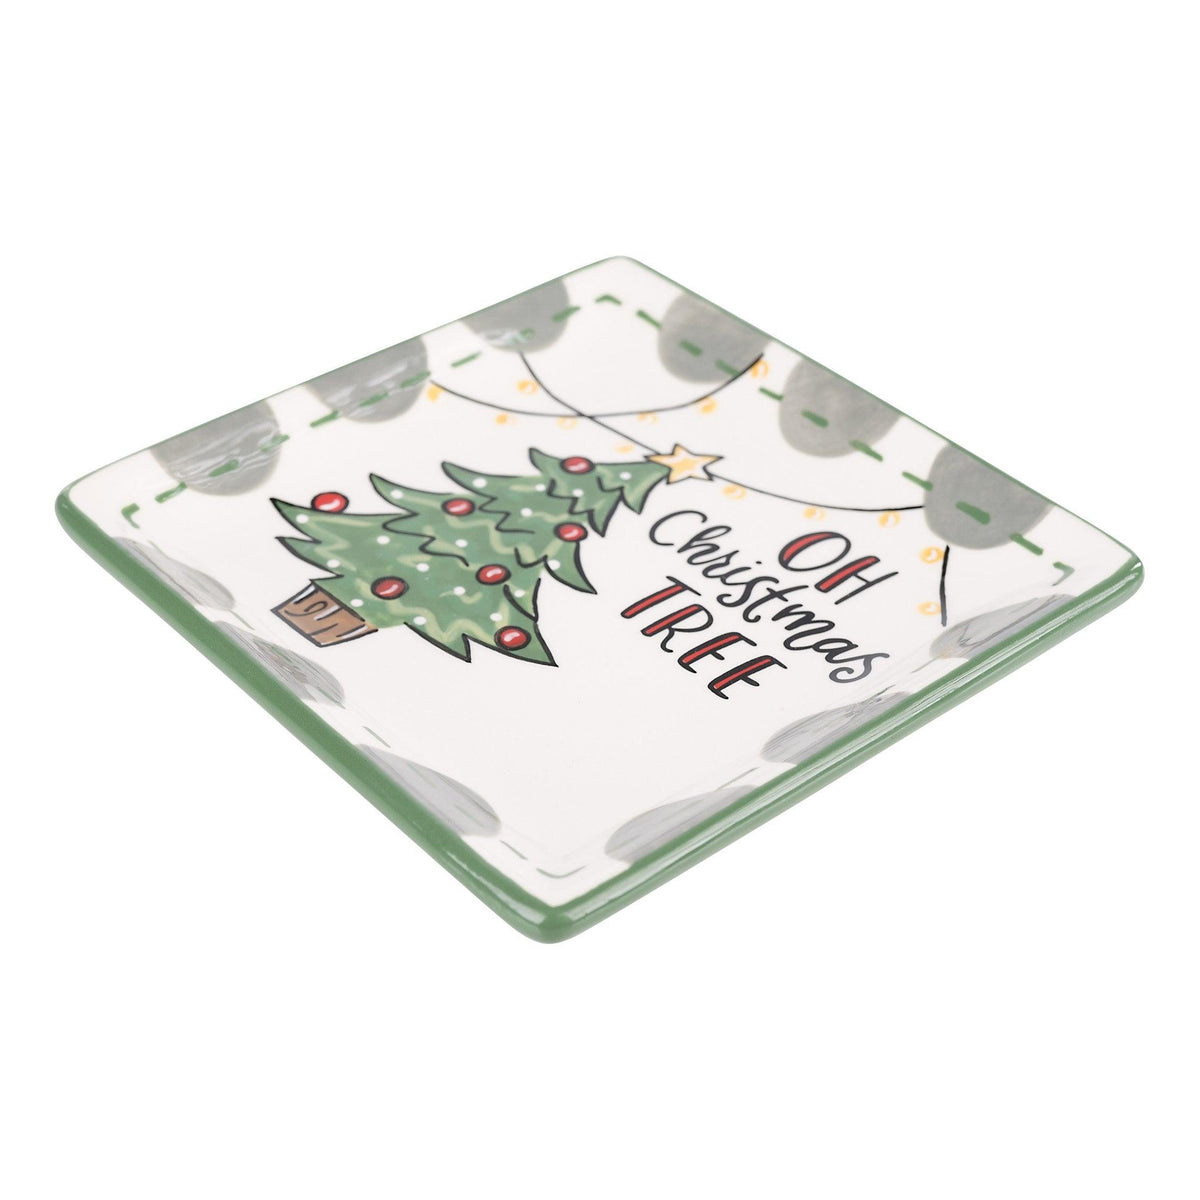 Christmas Tree Canape Plate - GLORY HAUS 